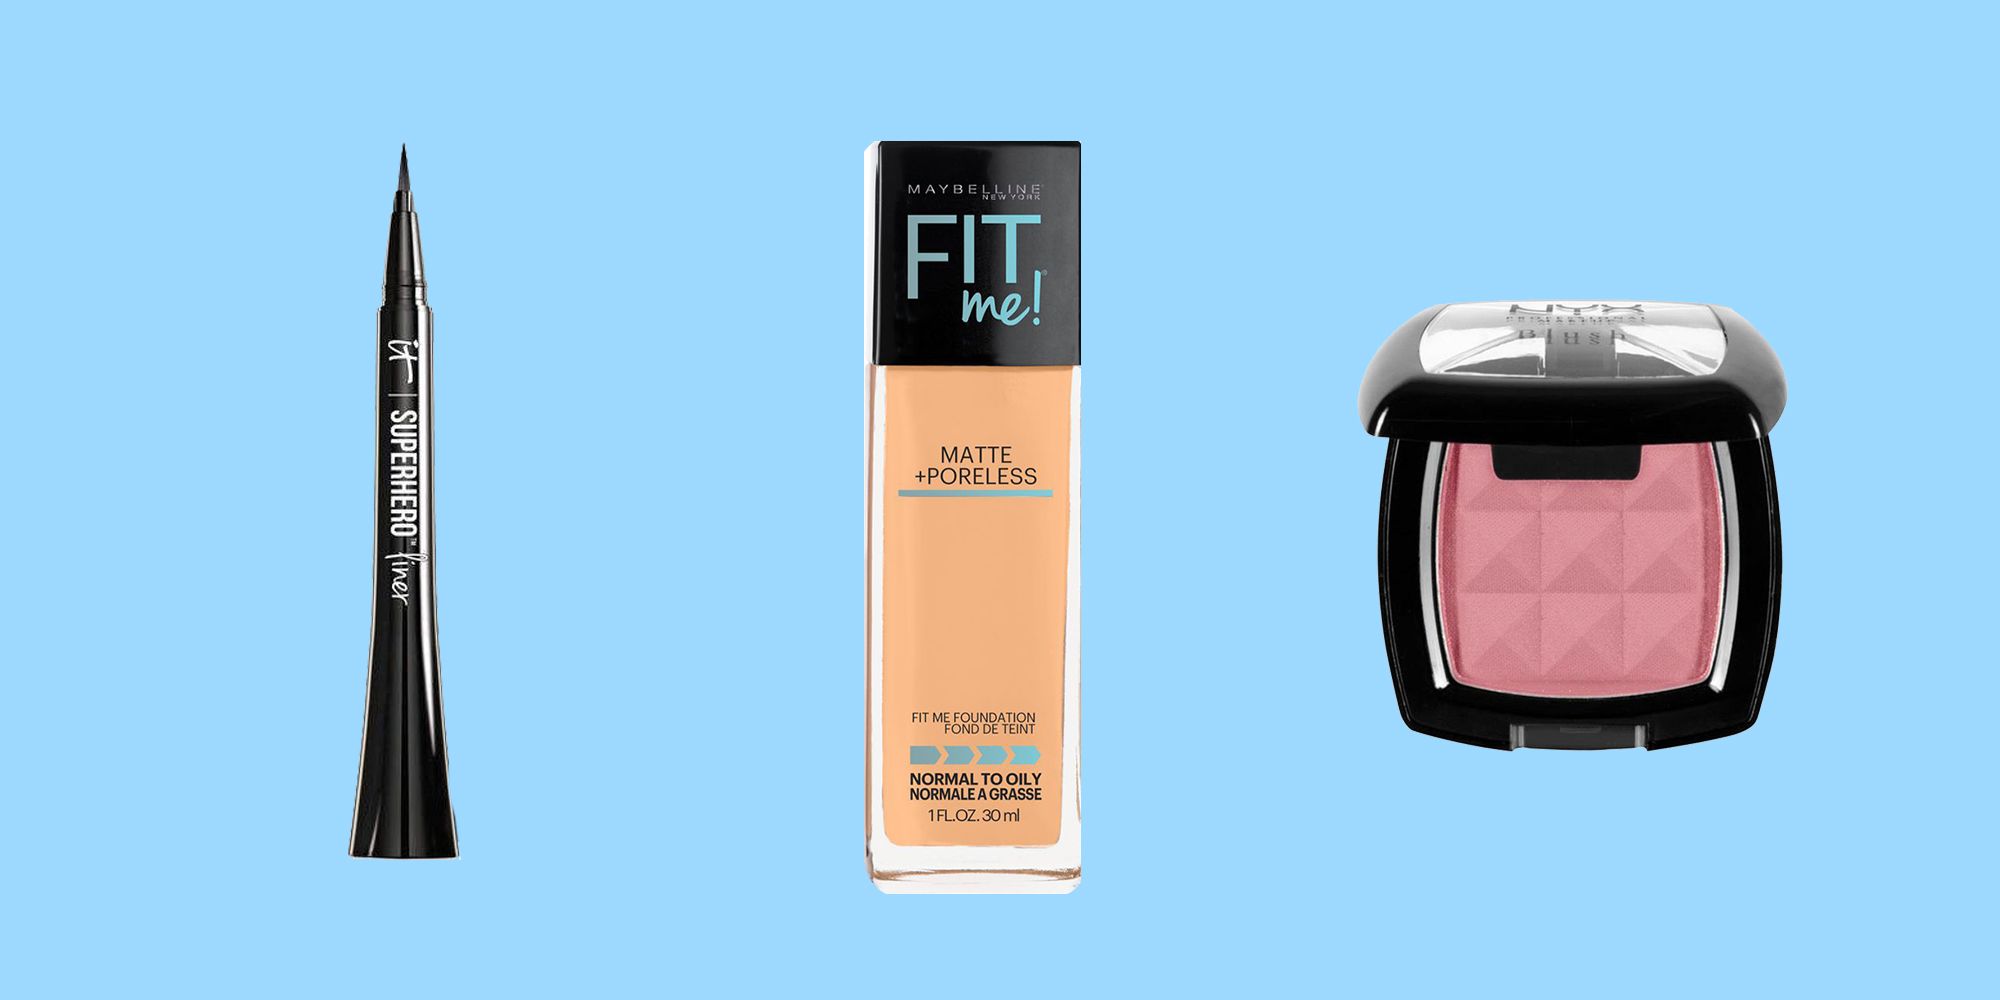 basic makeup kit for beginners mac